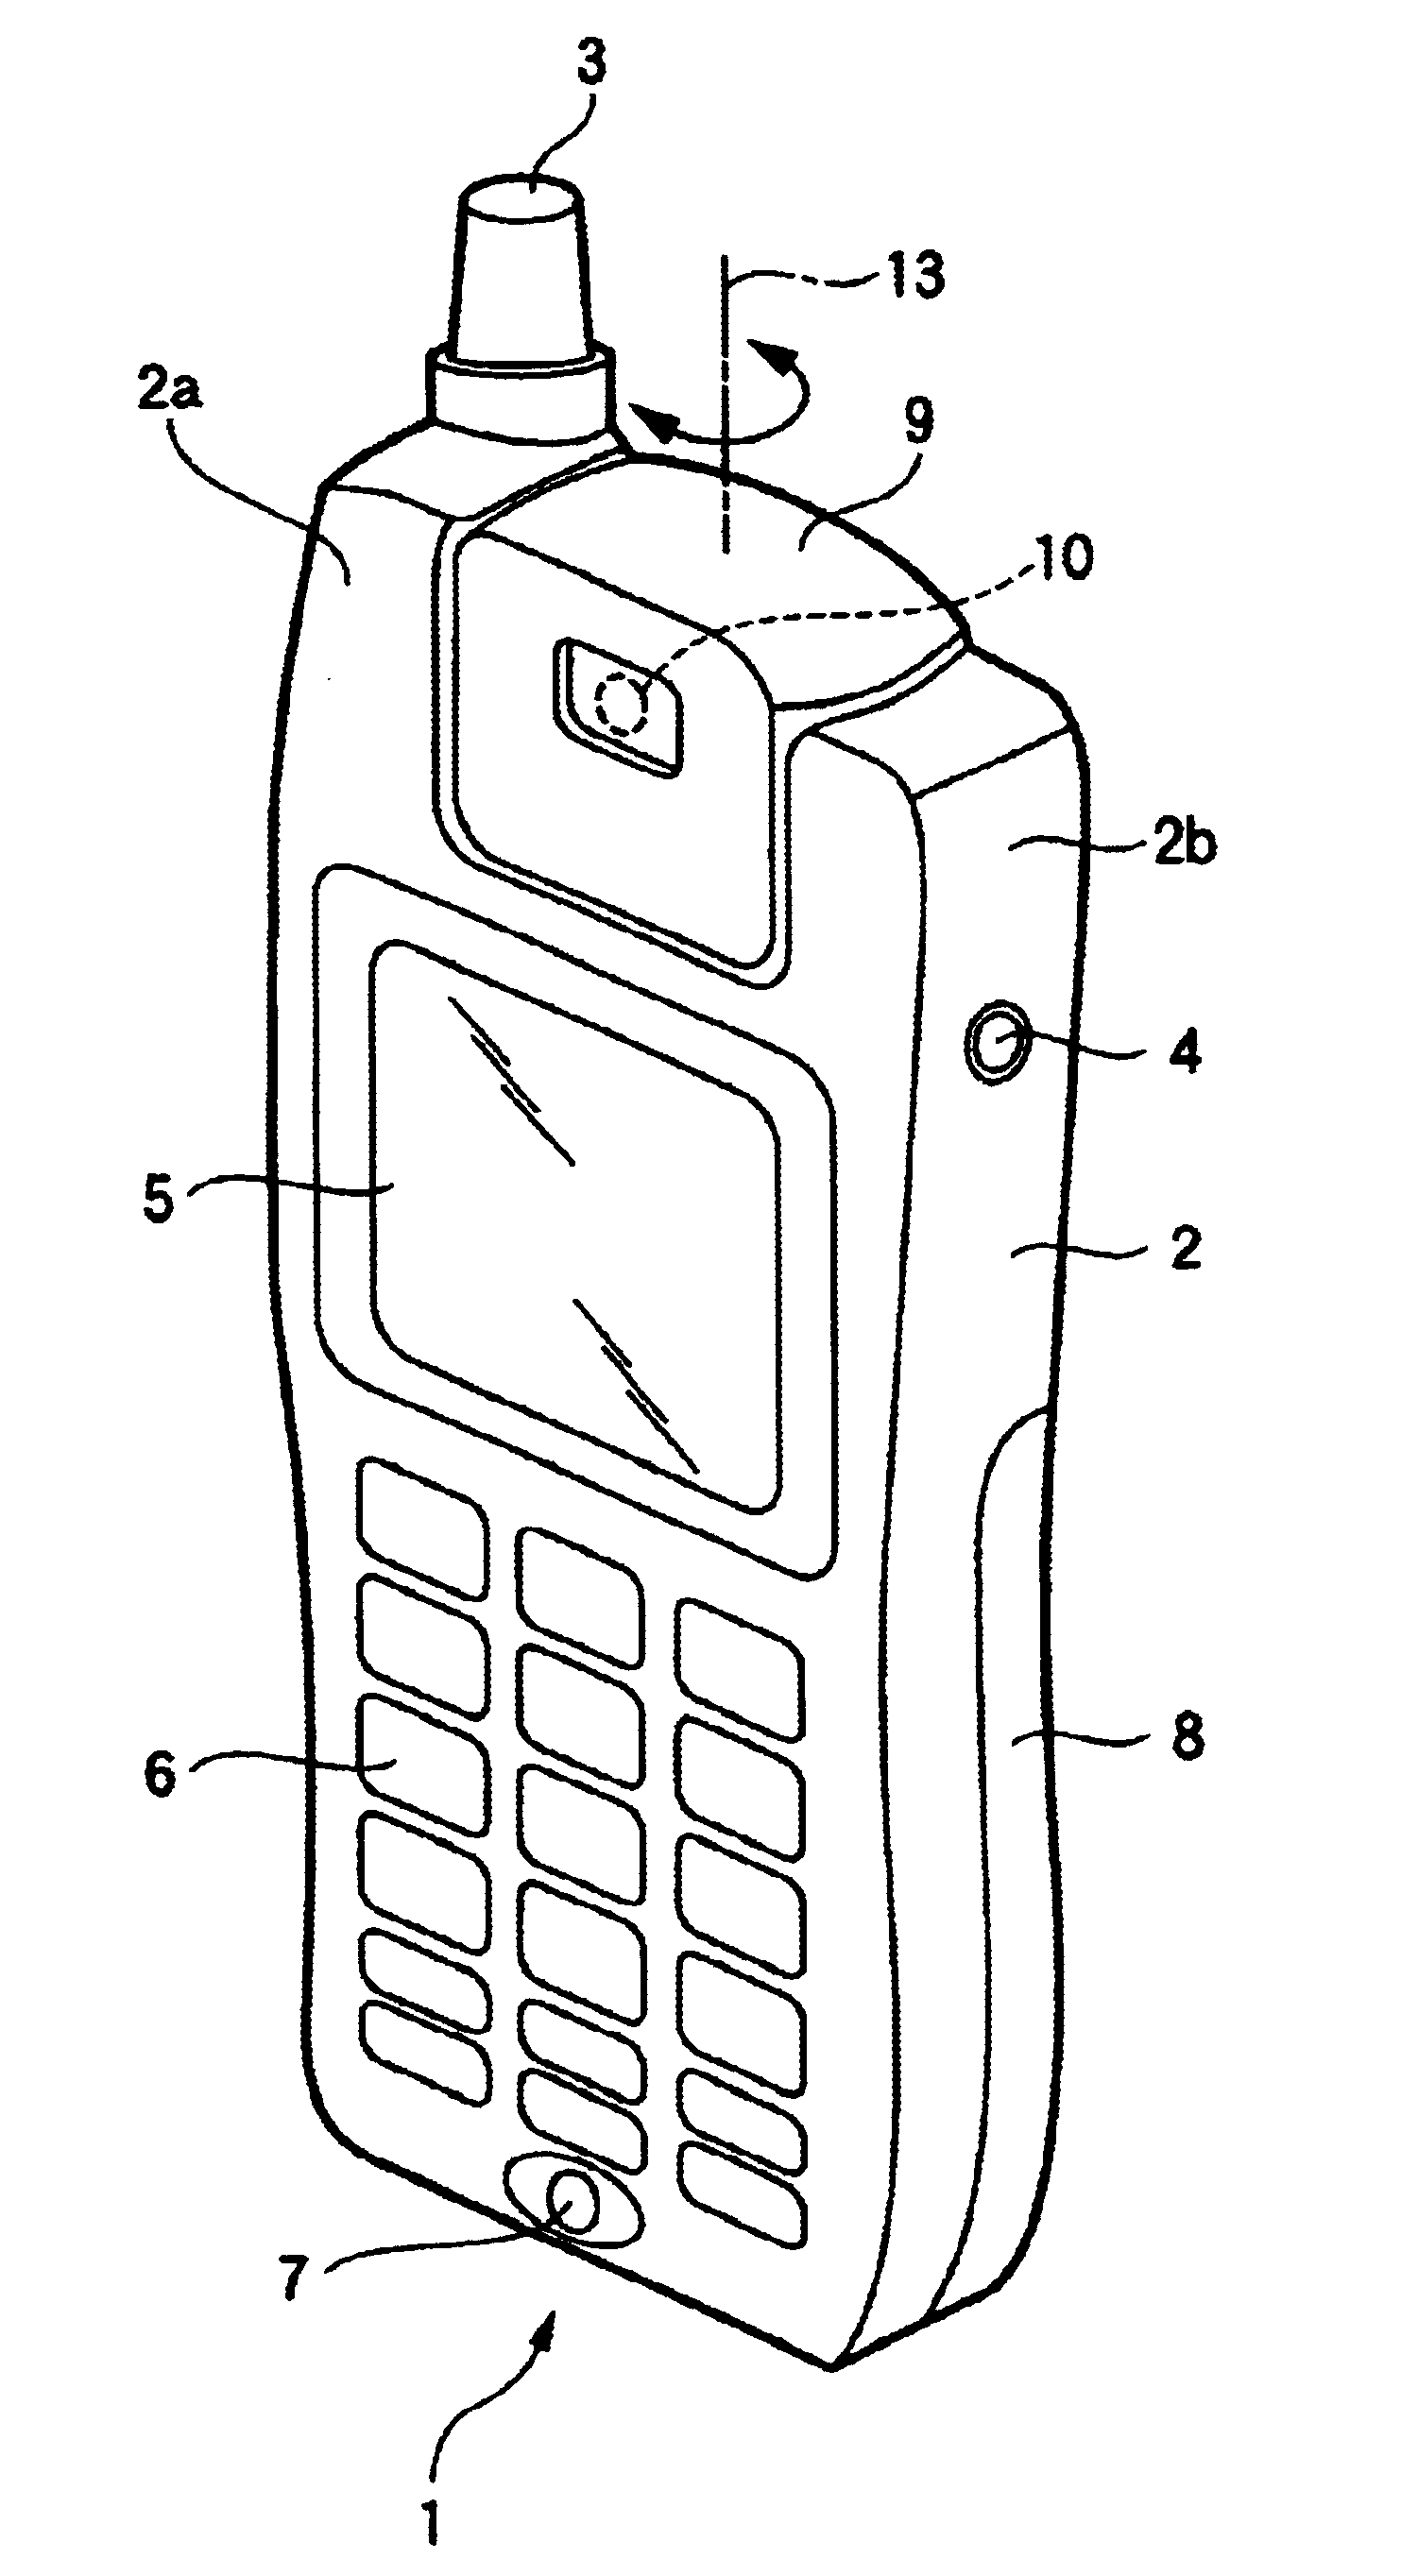 Mobile information communicating terminal device having video camera